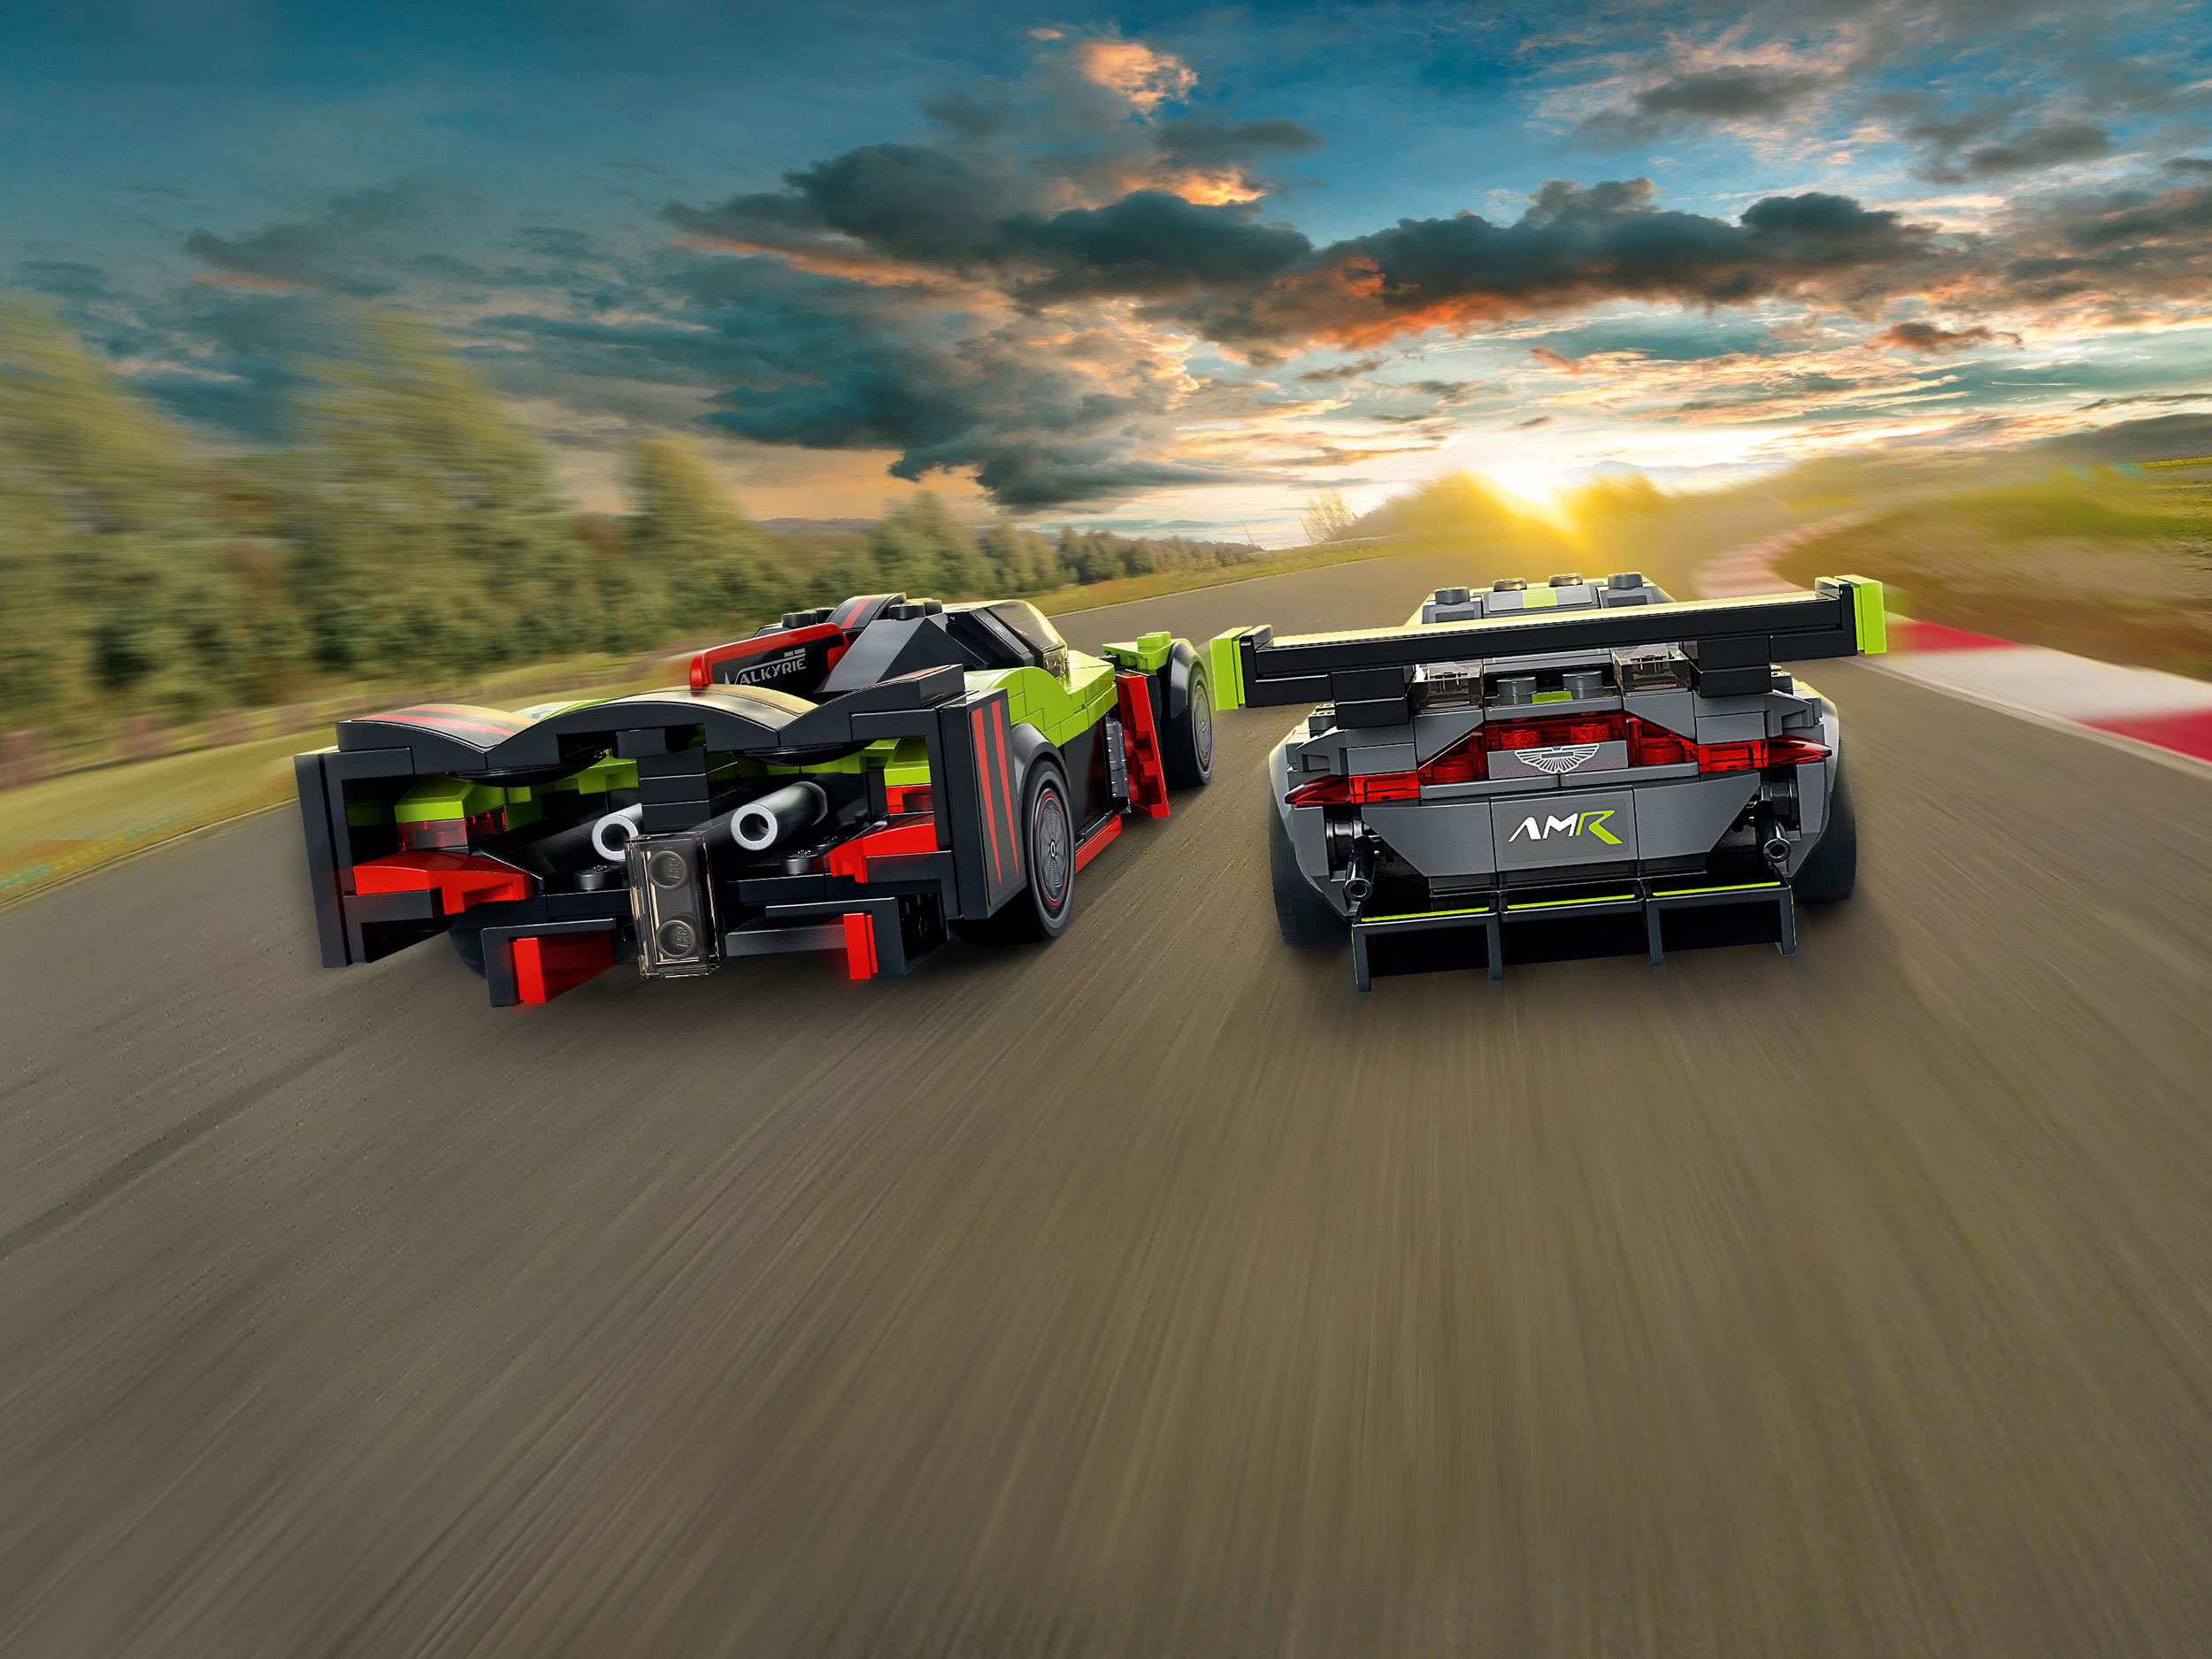 Конструктор LEGO Speed Champions 76910 Aston Martin Valkyrie AMR Pro и Vantage GT3